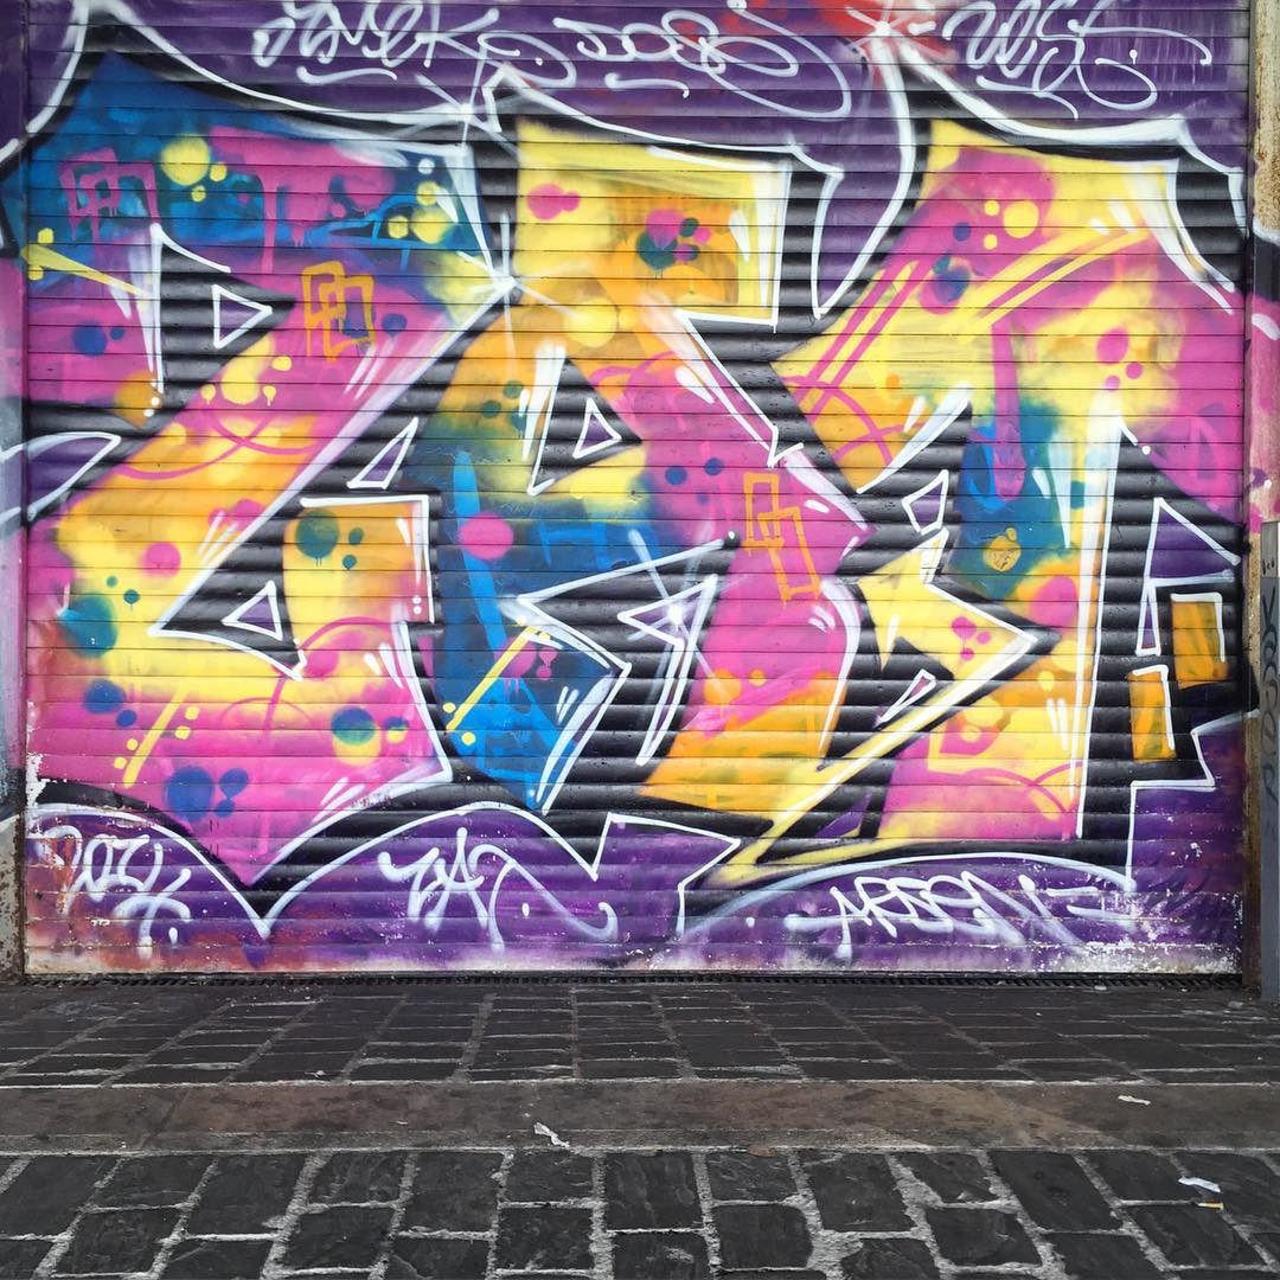 #Paris #graffiti photo by @catscoffeecreativity http://ift.tt/1QKPsNJ #StreetArt http://t.co/Gg1DAPmeY9